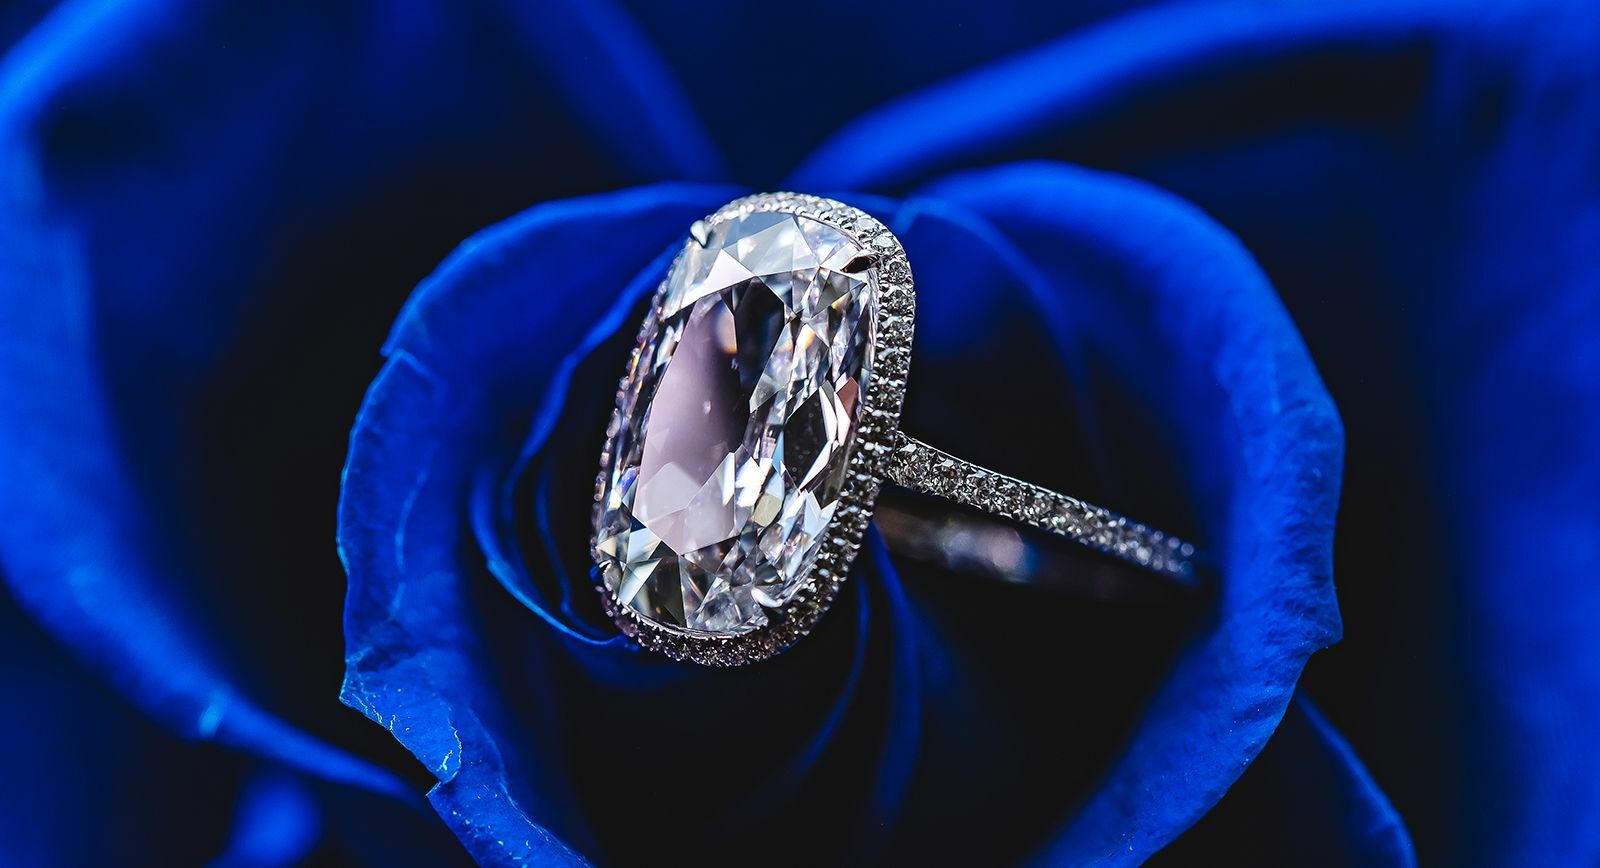 House of Geneva Jet d’Eau Numéro 2 ring with a Type IIa antique cushion-cut diamond of 3.75 carats